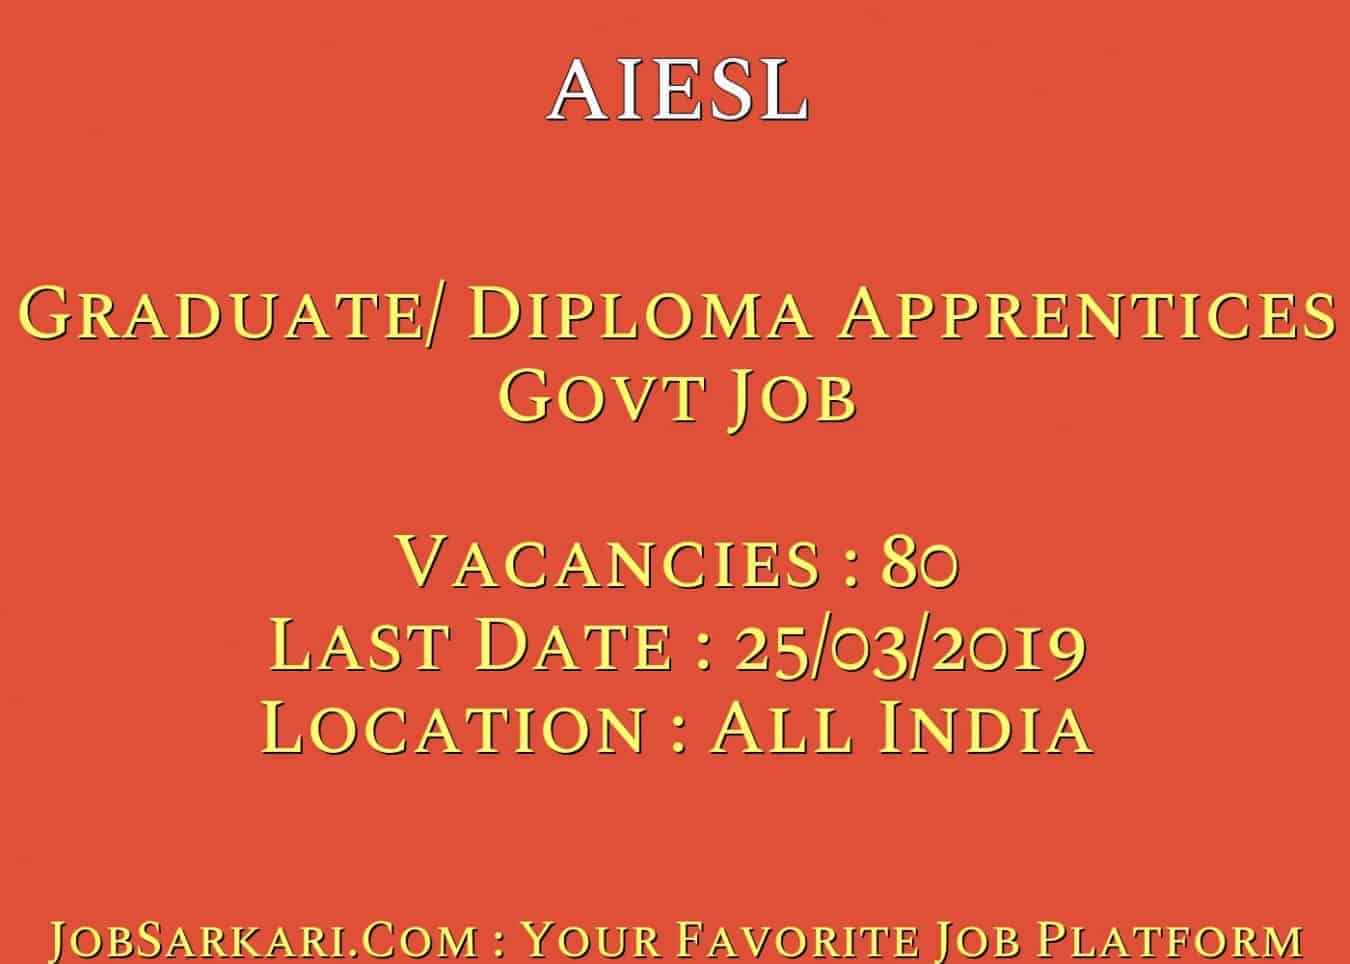 AIESL Recruitment 2019 For Graduate/ Diploma Apprentices Govt Job